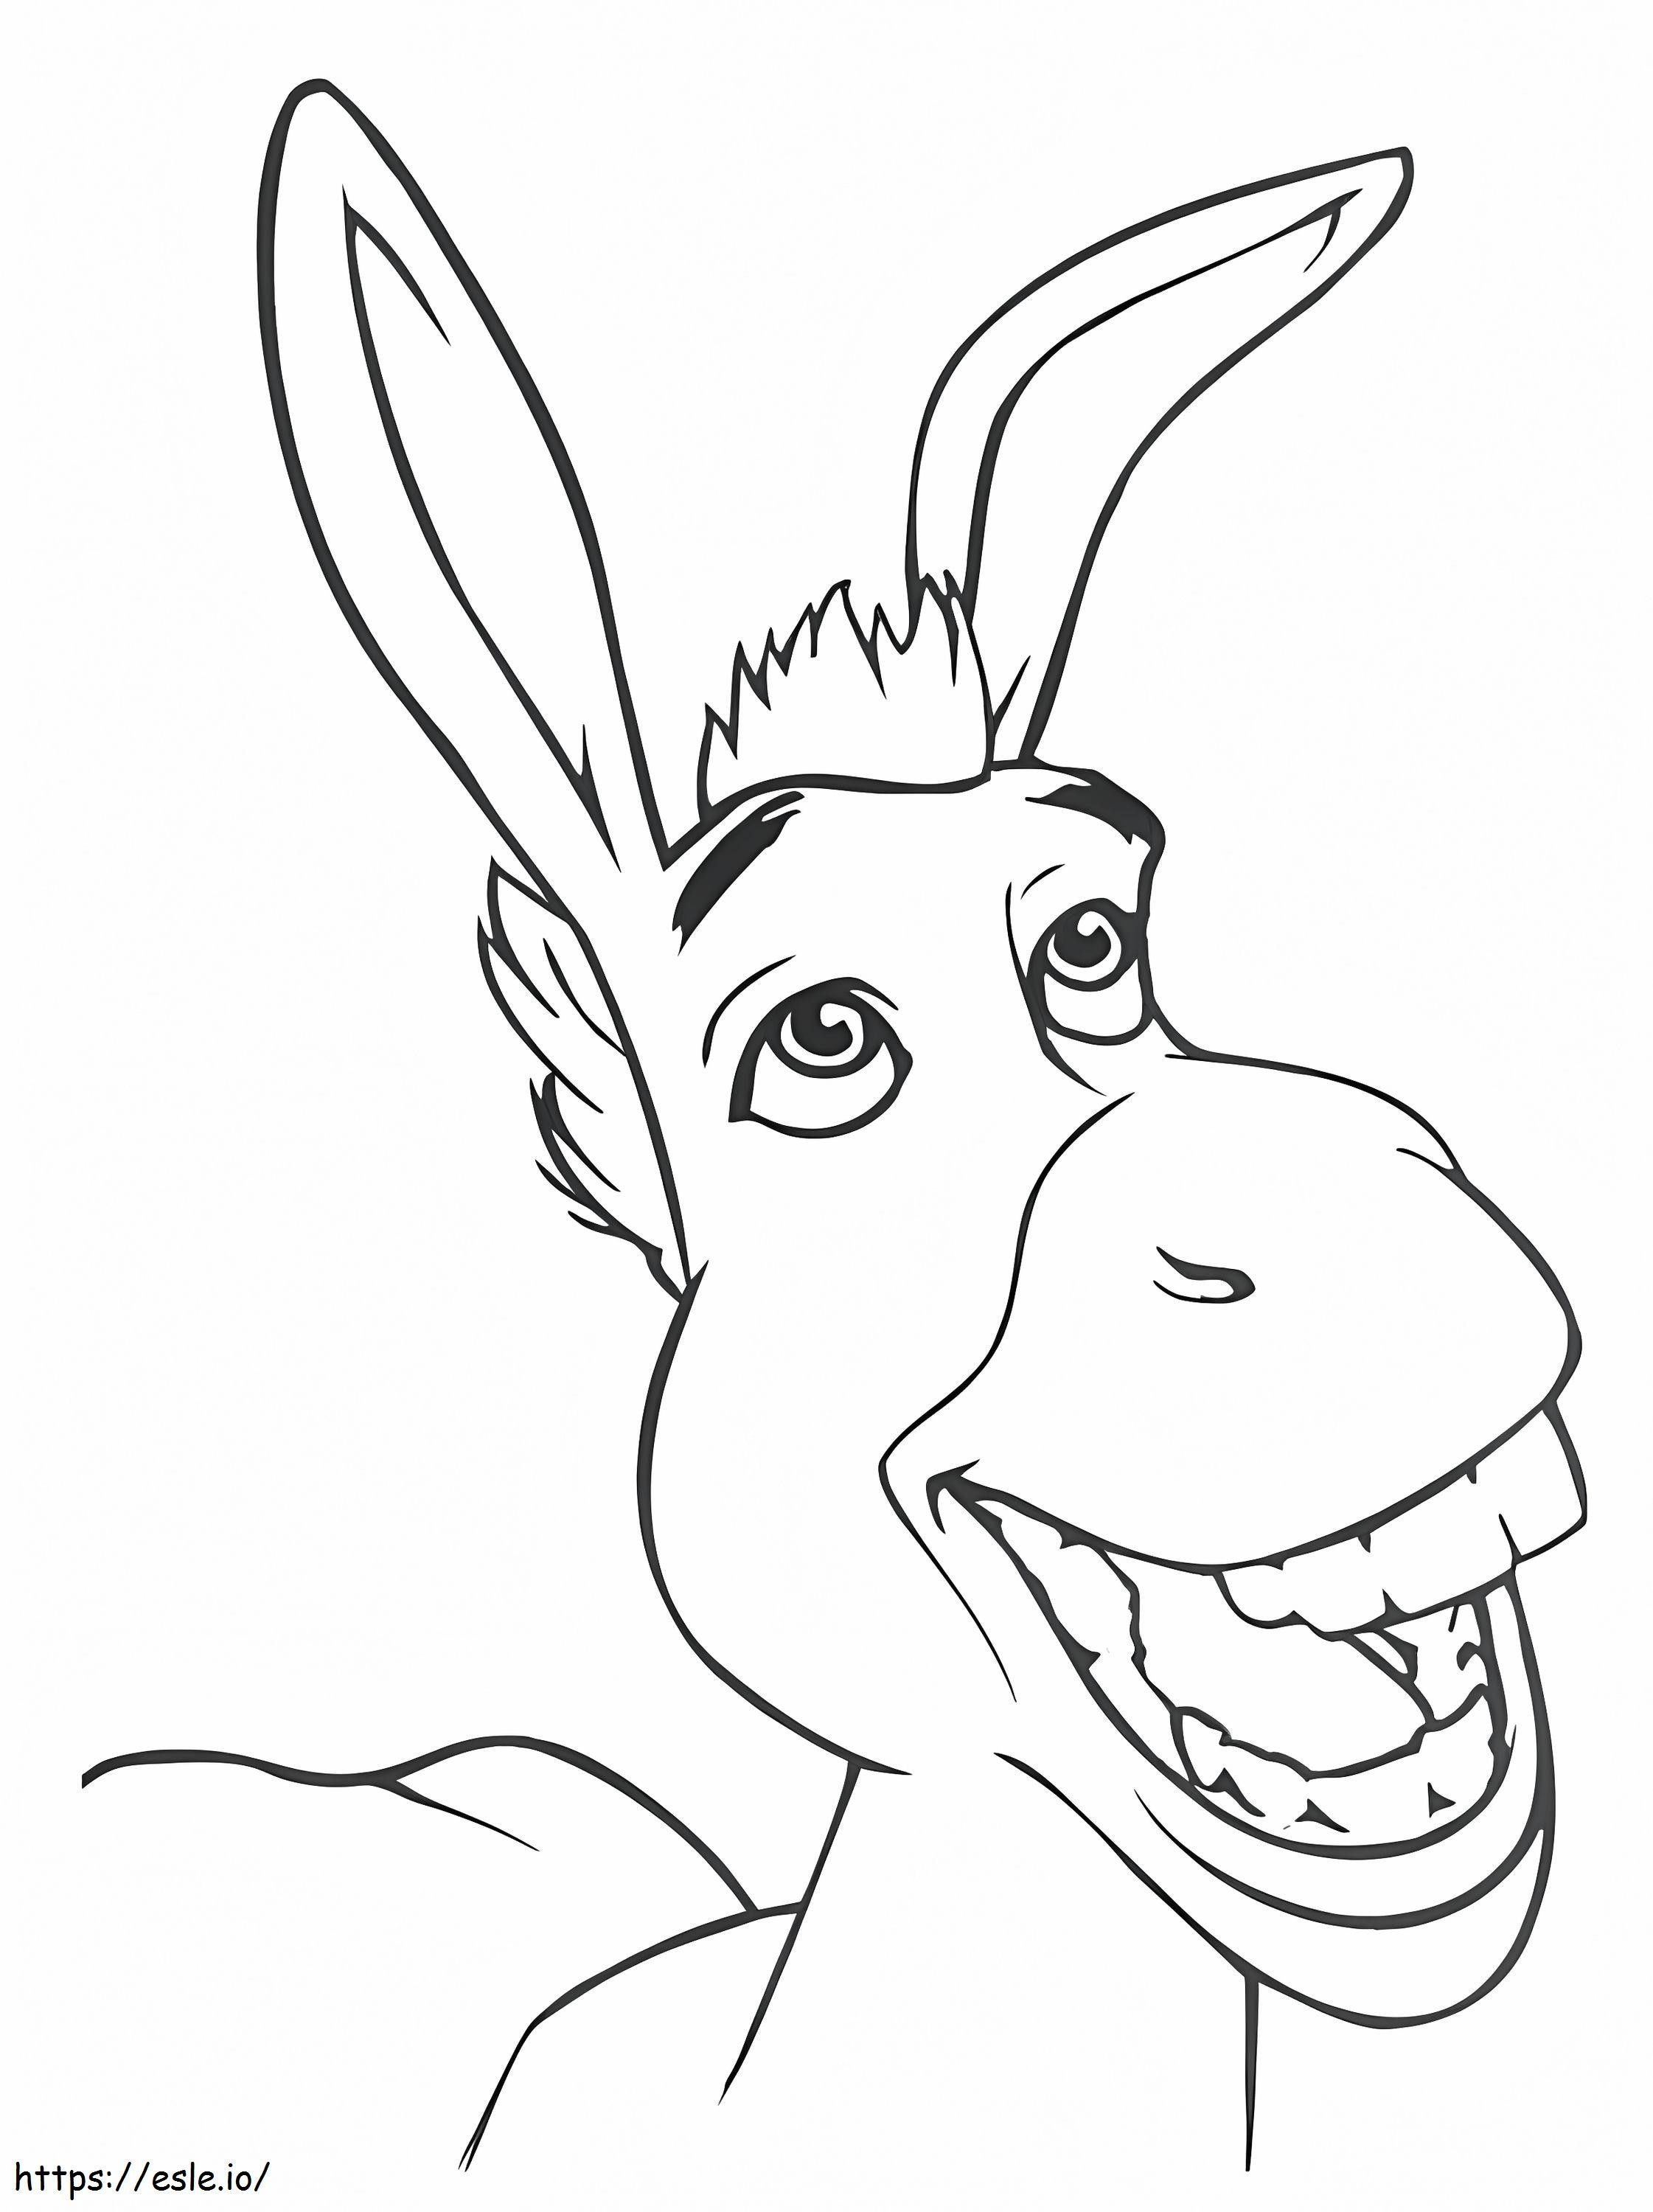 Cara de burro engraçada para colorir